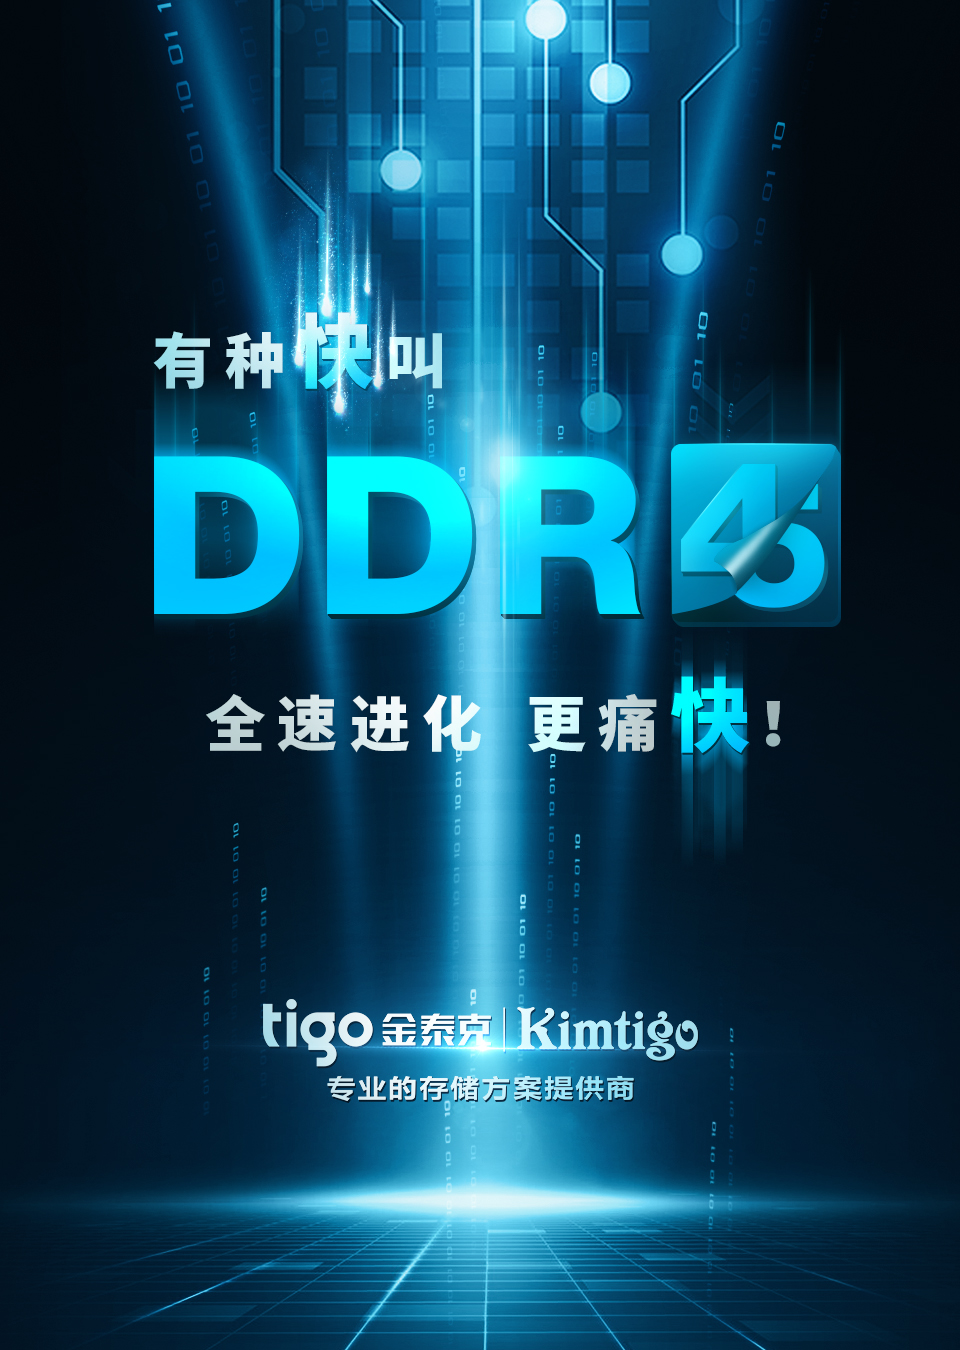 ddr5支持pcie吗 DDR5 内存条：速度与能耗的完美结合，引领内存革命新潮流  第3张